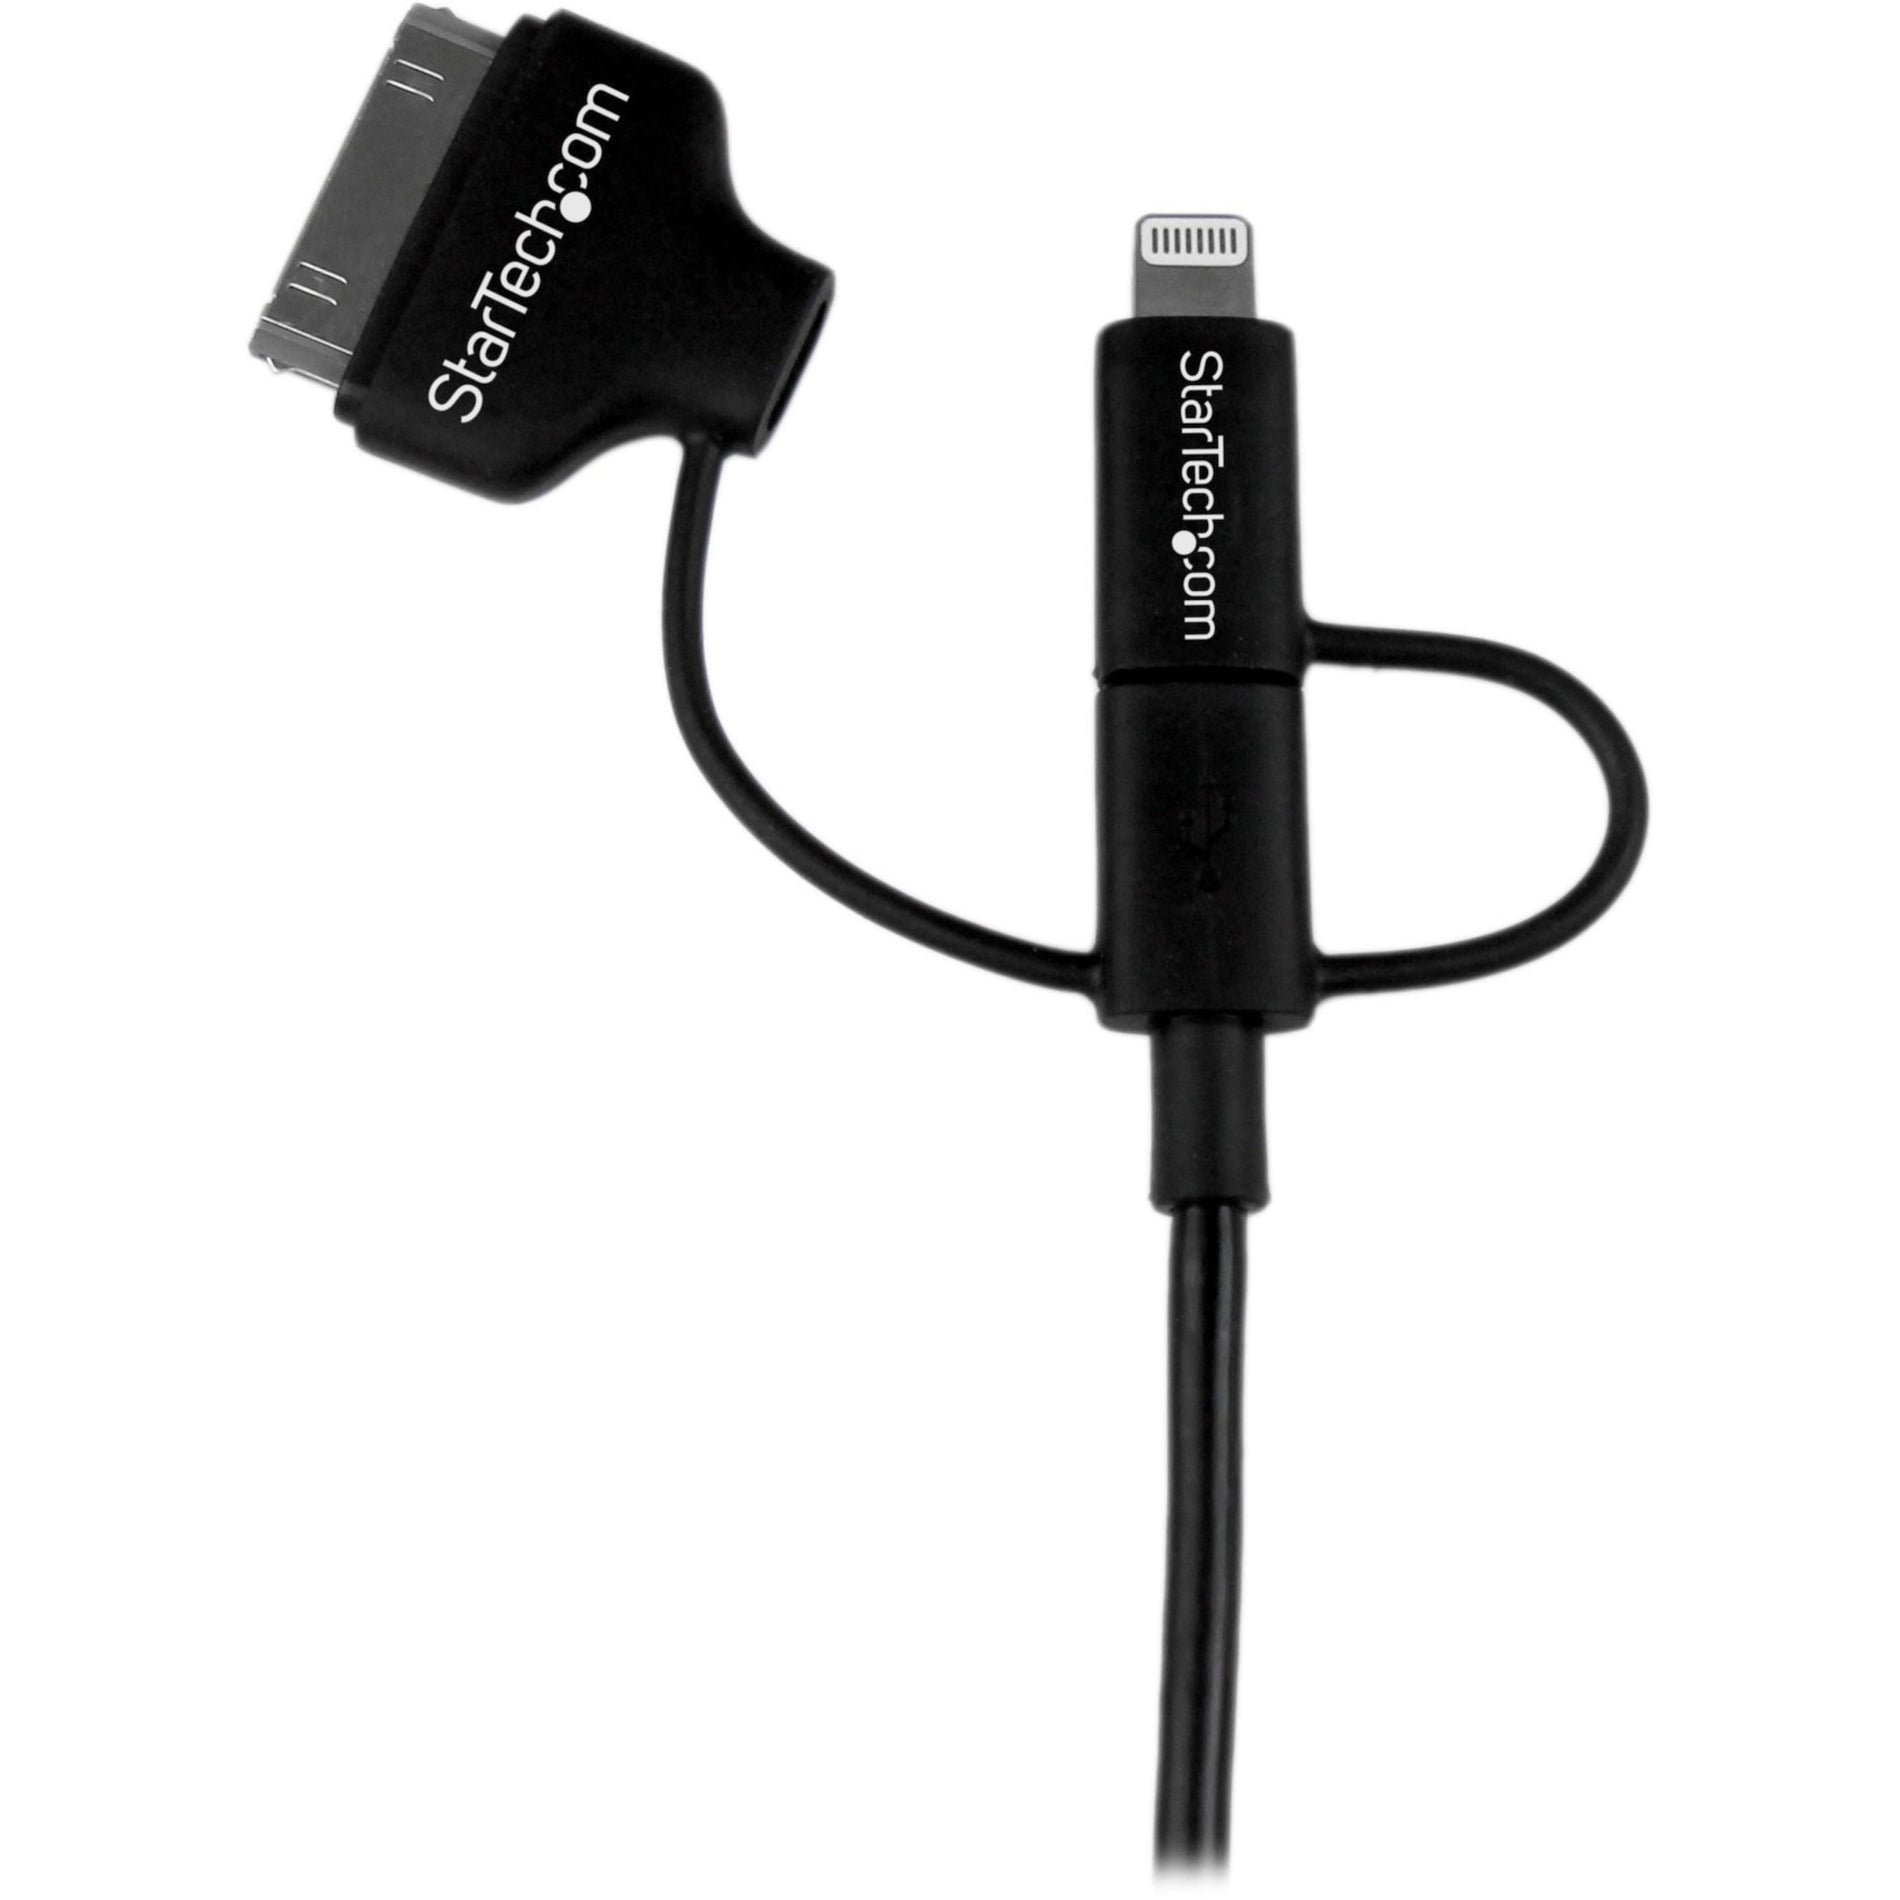 StarTech.com LTADUB1MB Lightning/30-pin Dock/Micro USB to USB Combo Cable for iPhone / iPod / iPad, 3.28 ft, Black